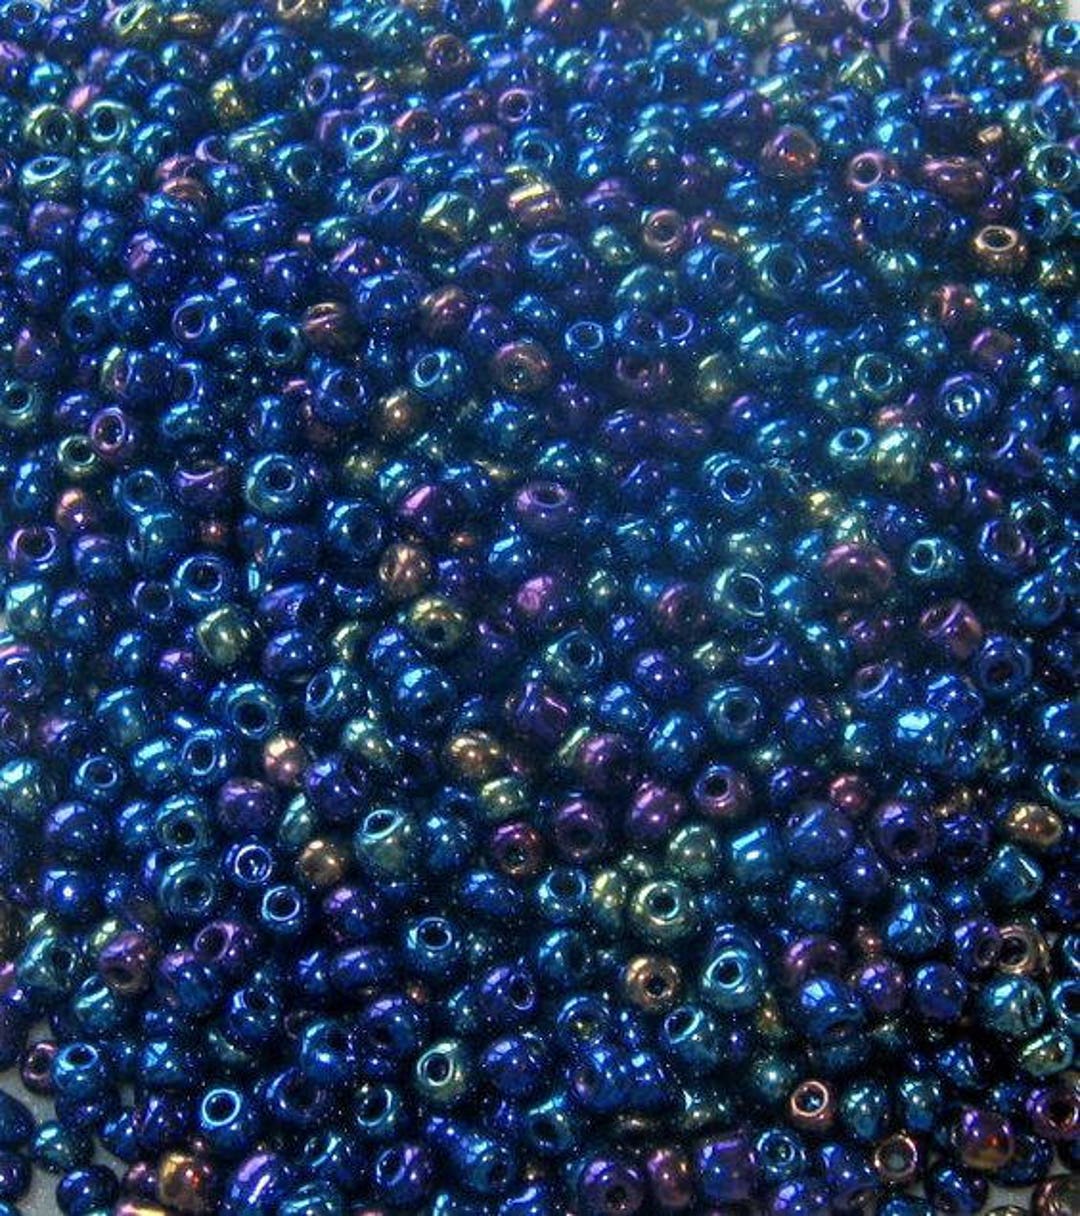 Lot (1500) Czech vintage dark blue glass seed beads